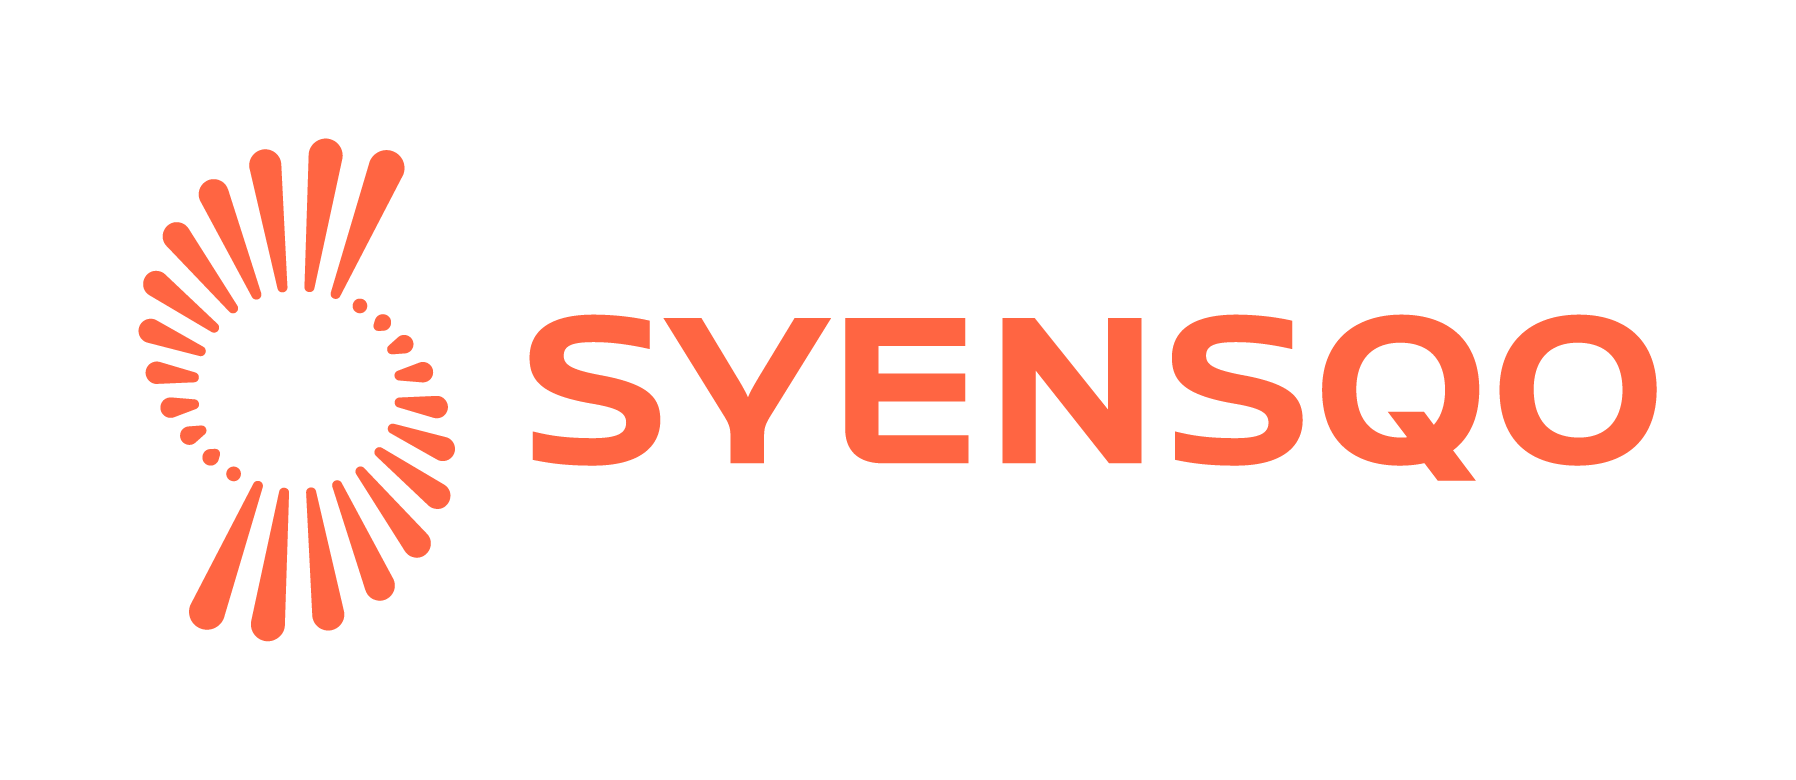 Syensqo Logo in orange